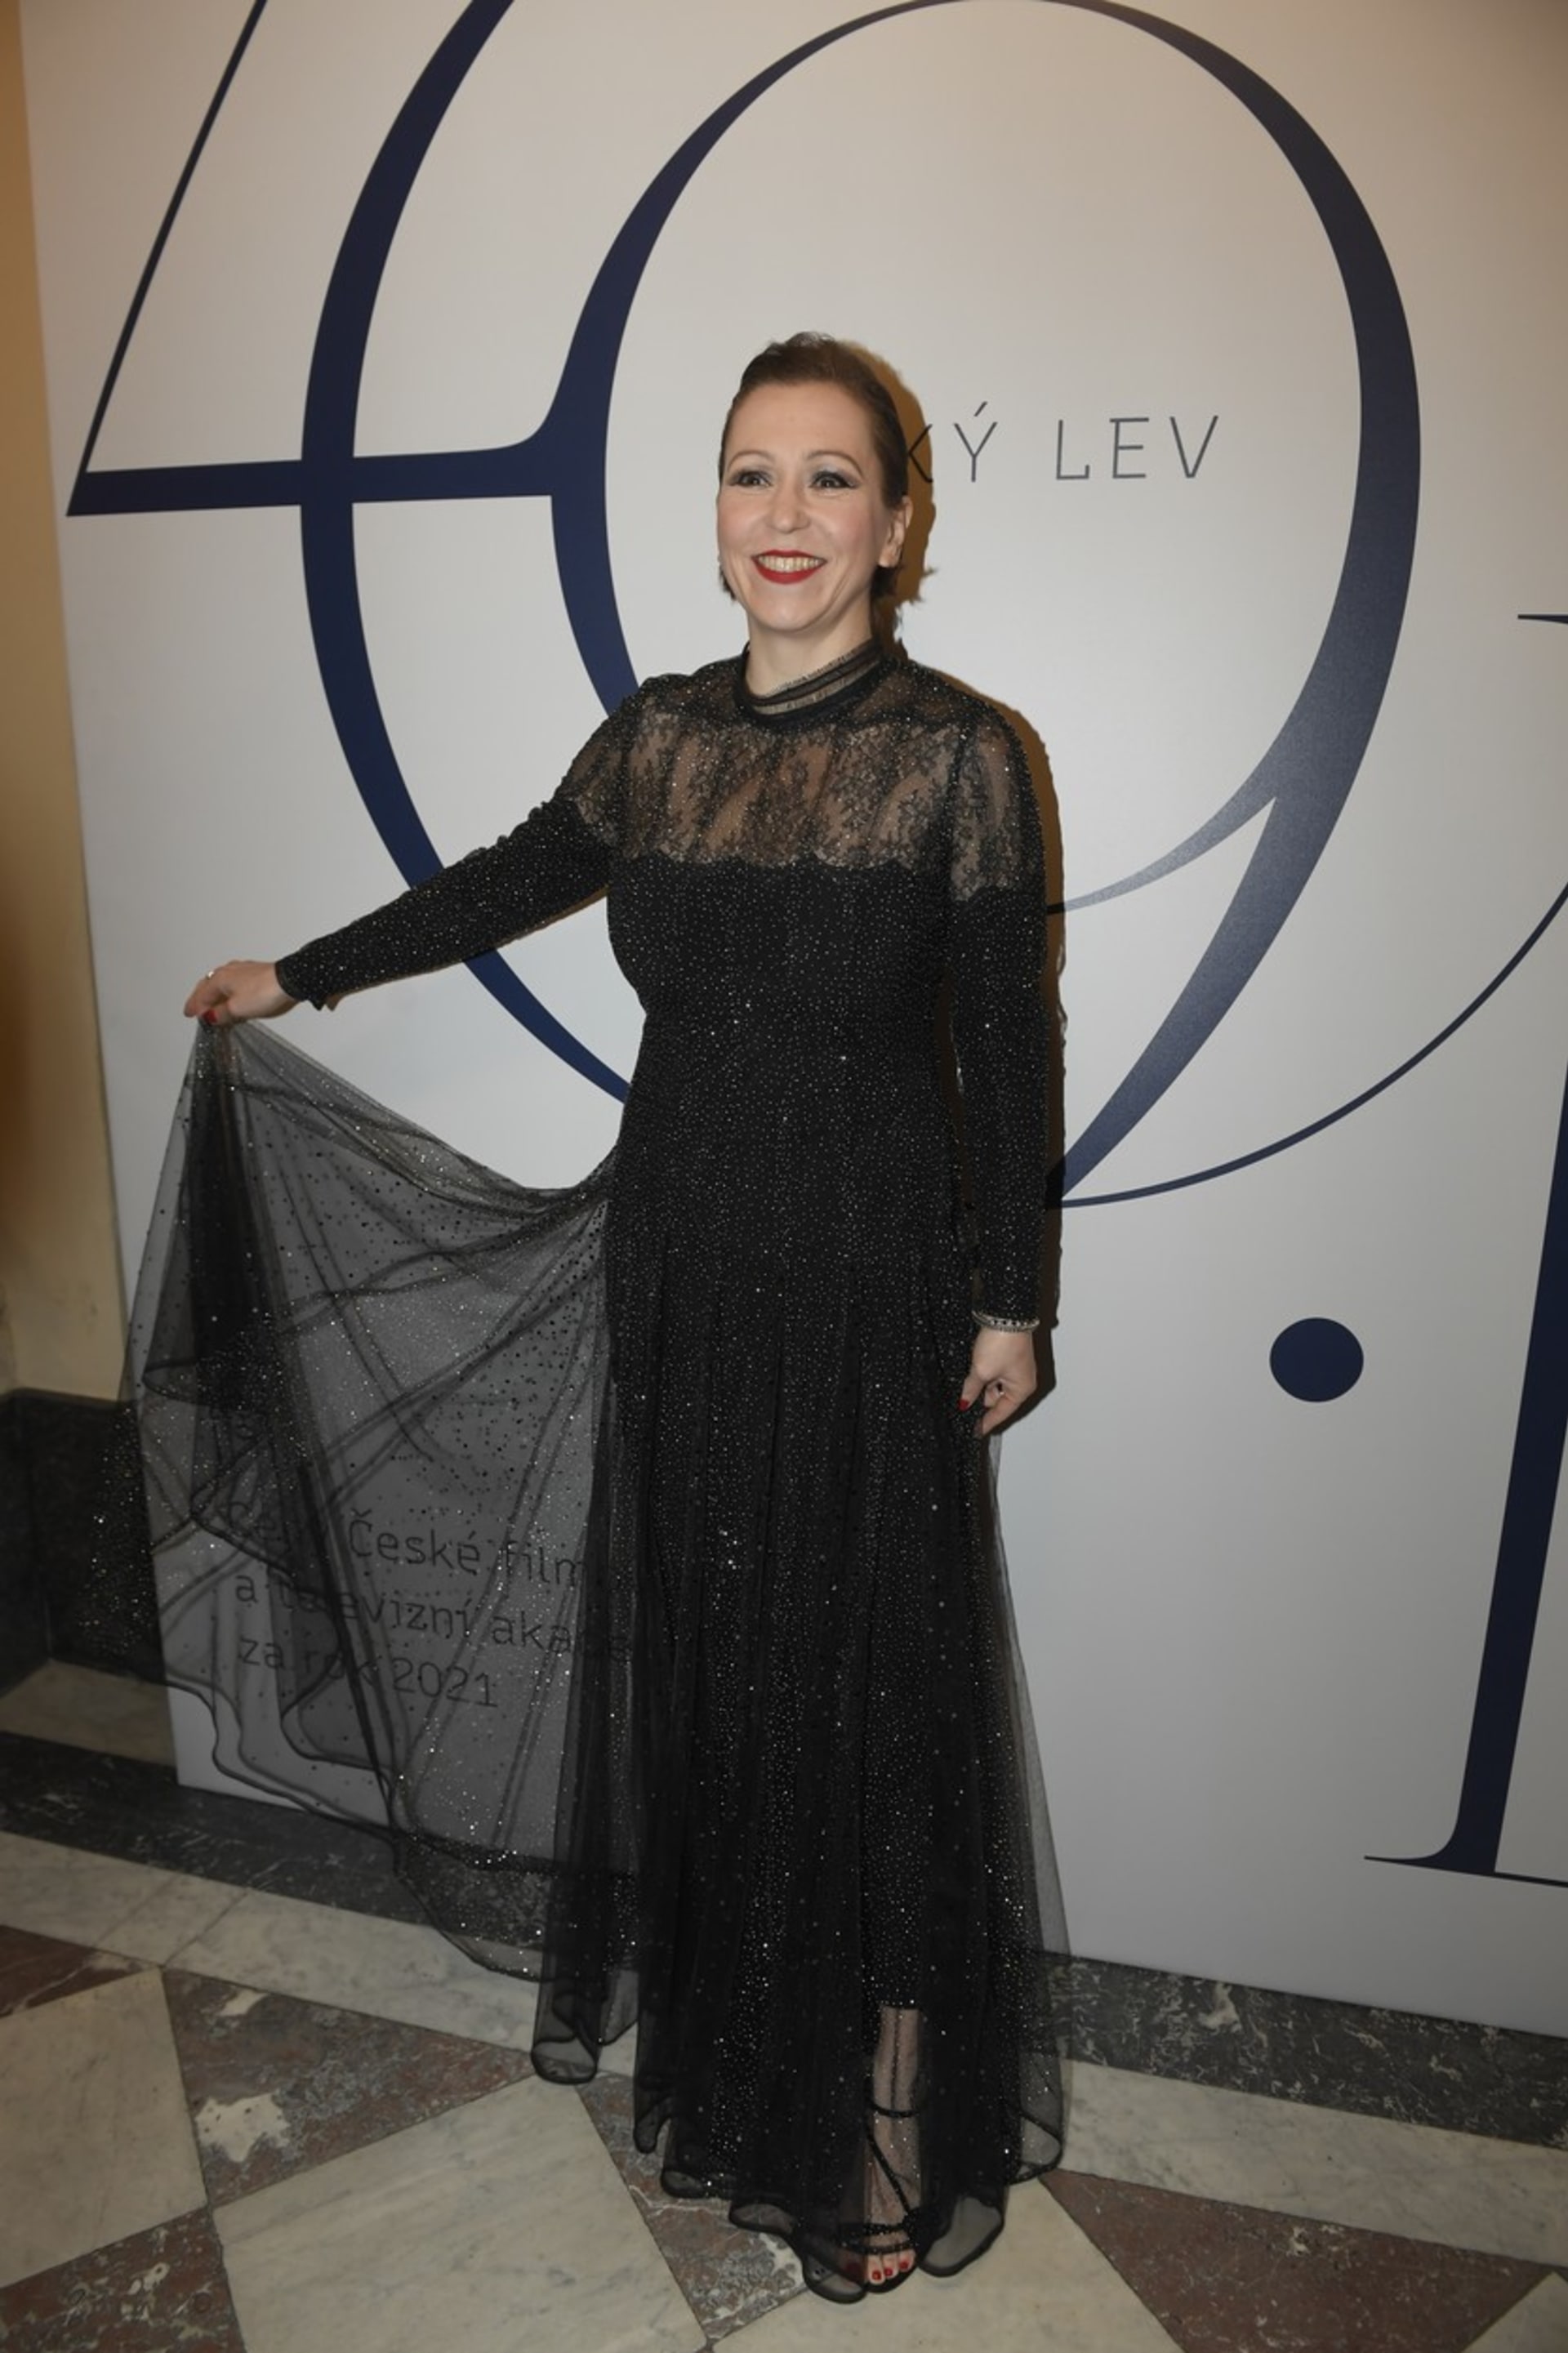 Galavečera se zúčastnila i herečka Zuzana Stivínová v černé róbě.